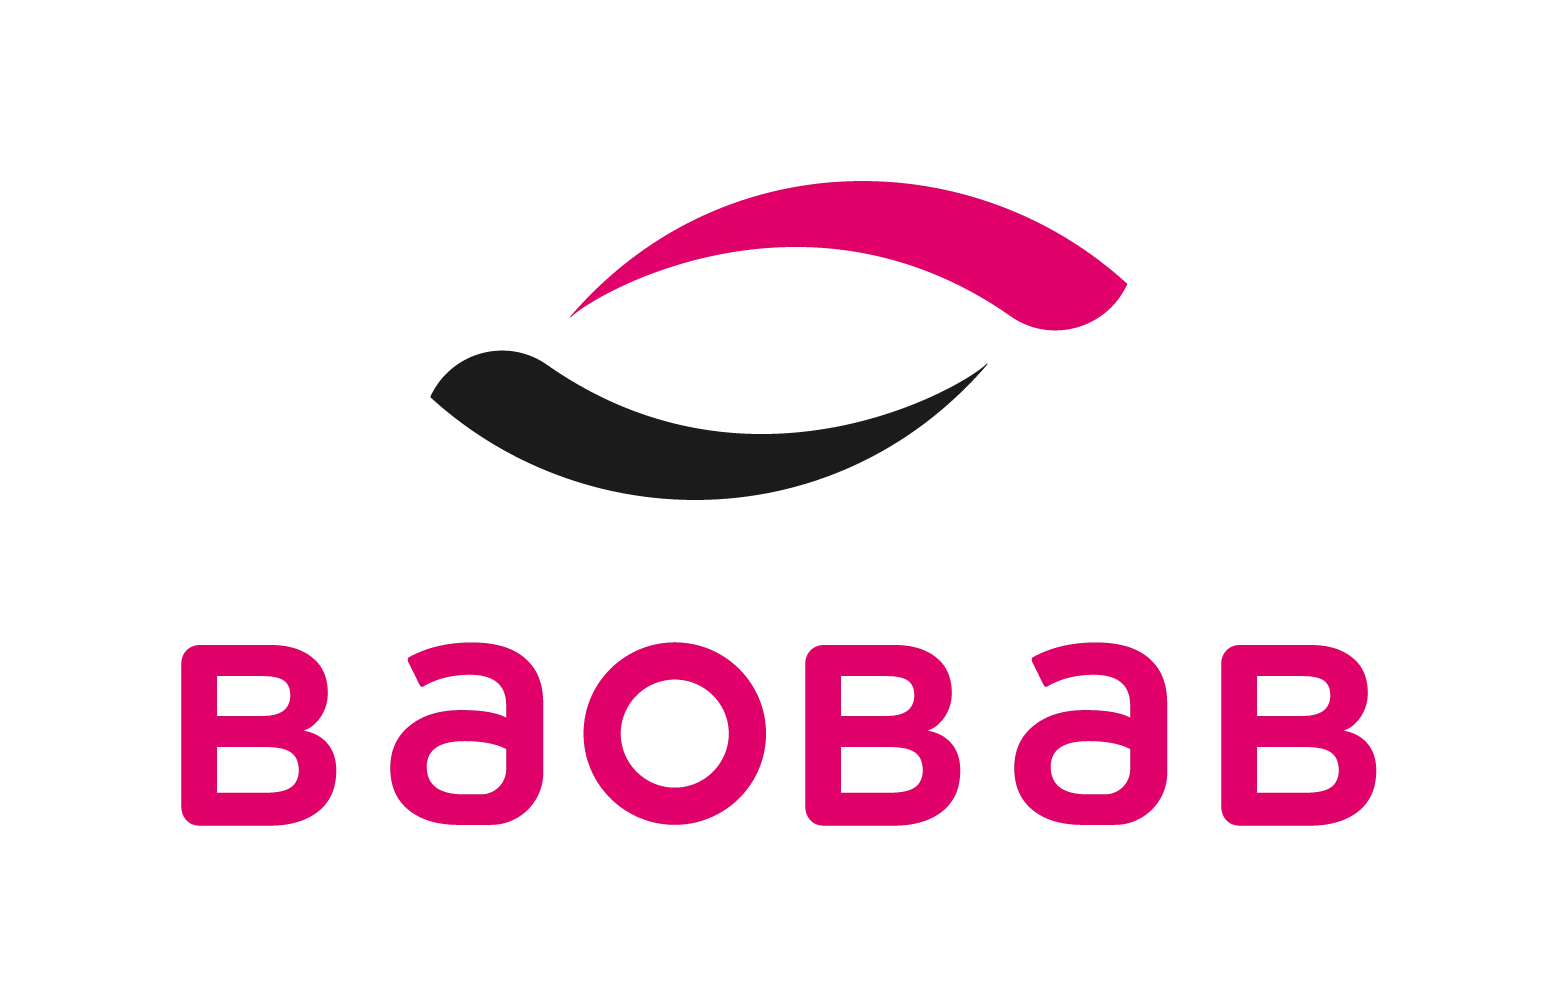 Groupe Baobab recrute un analyste risques, Dakar, Sénégal